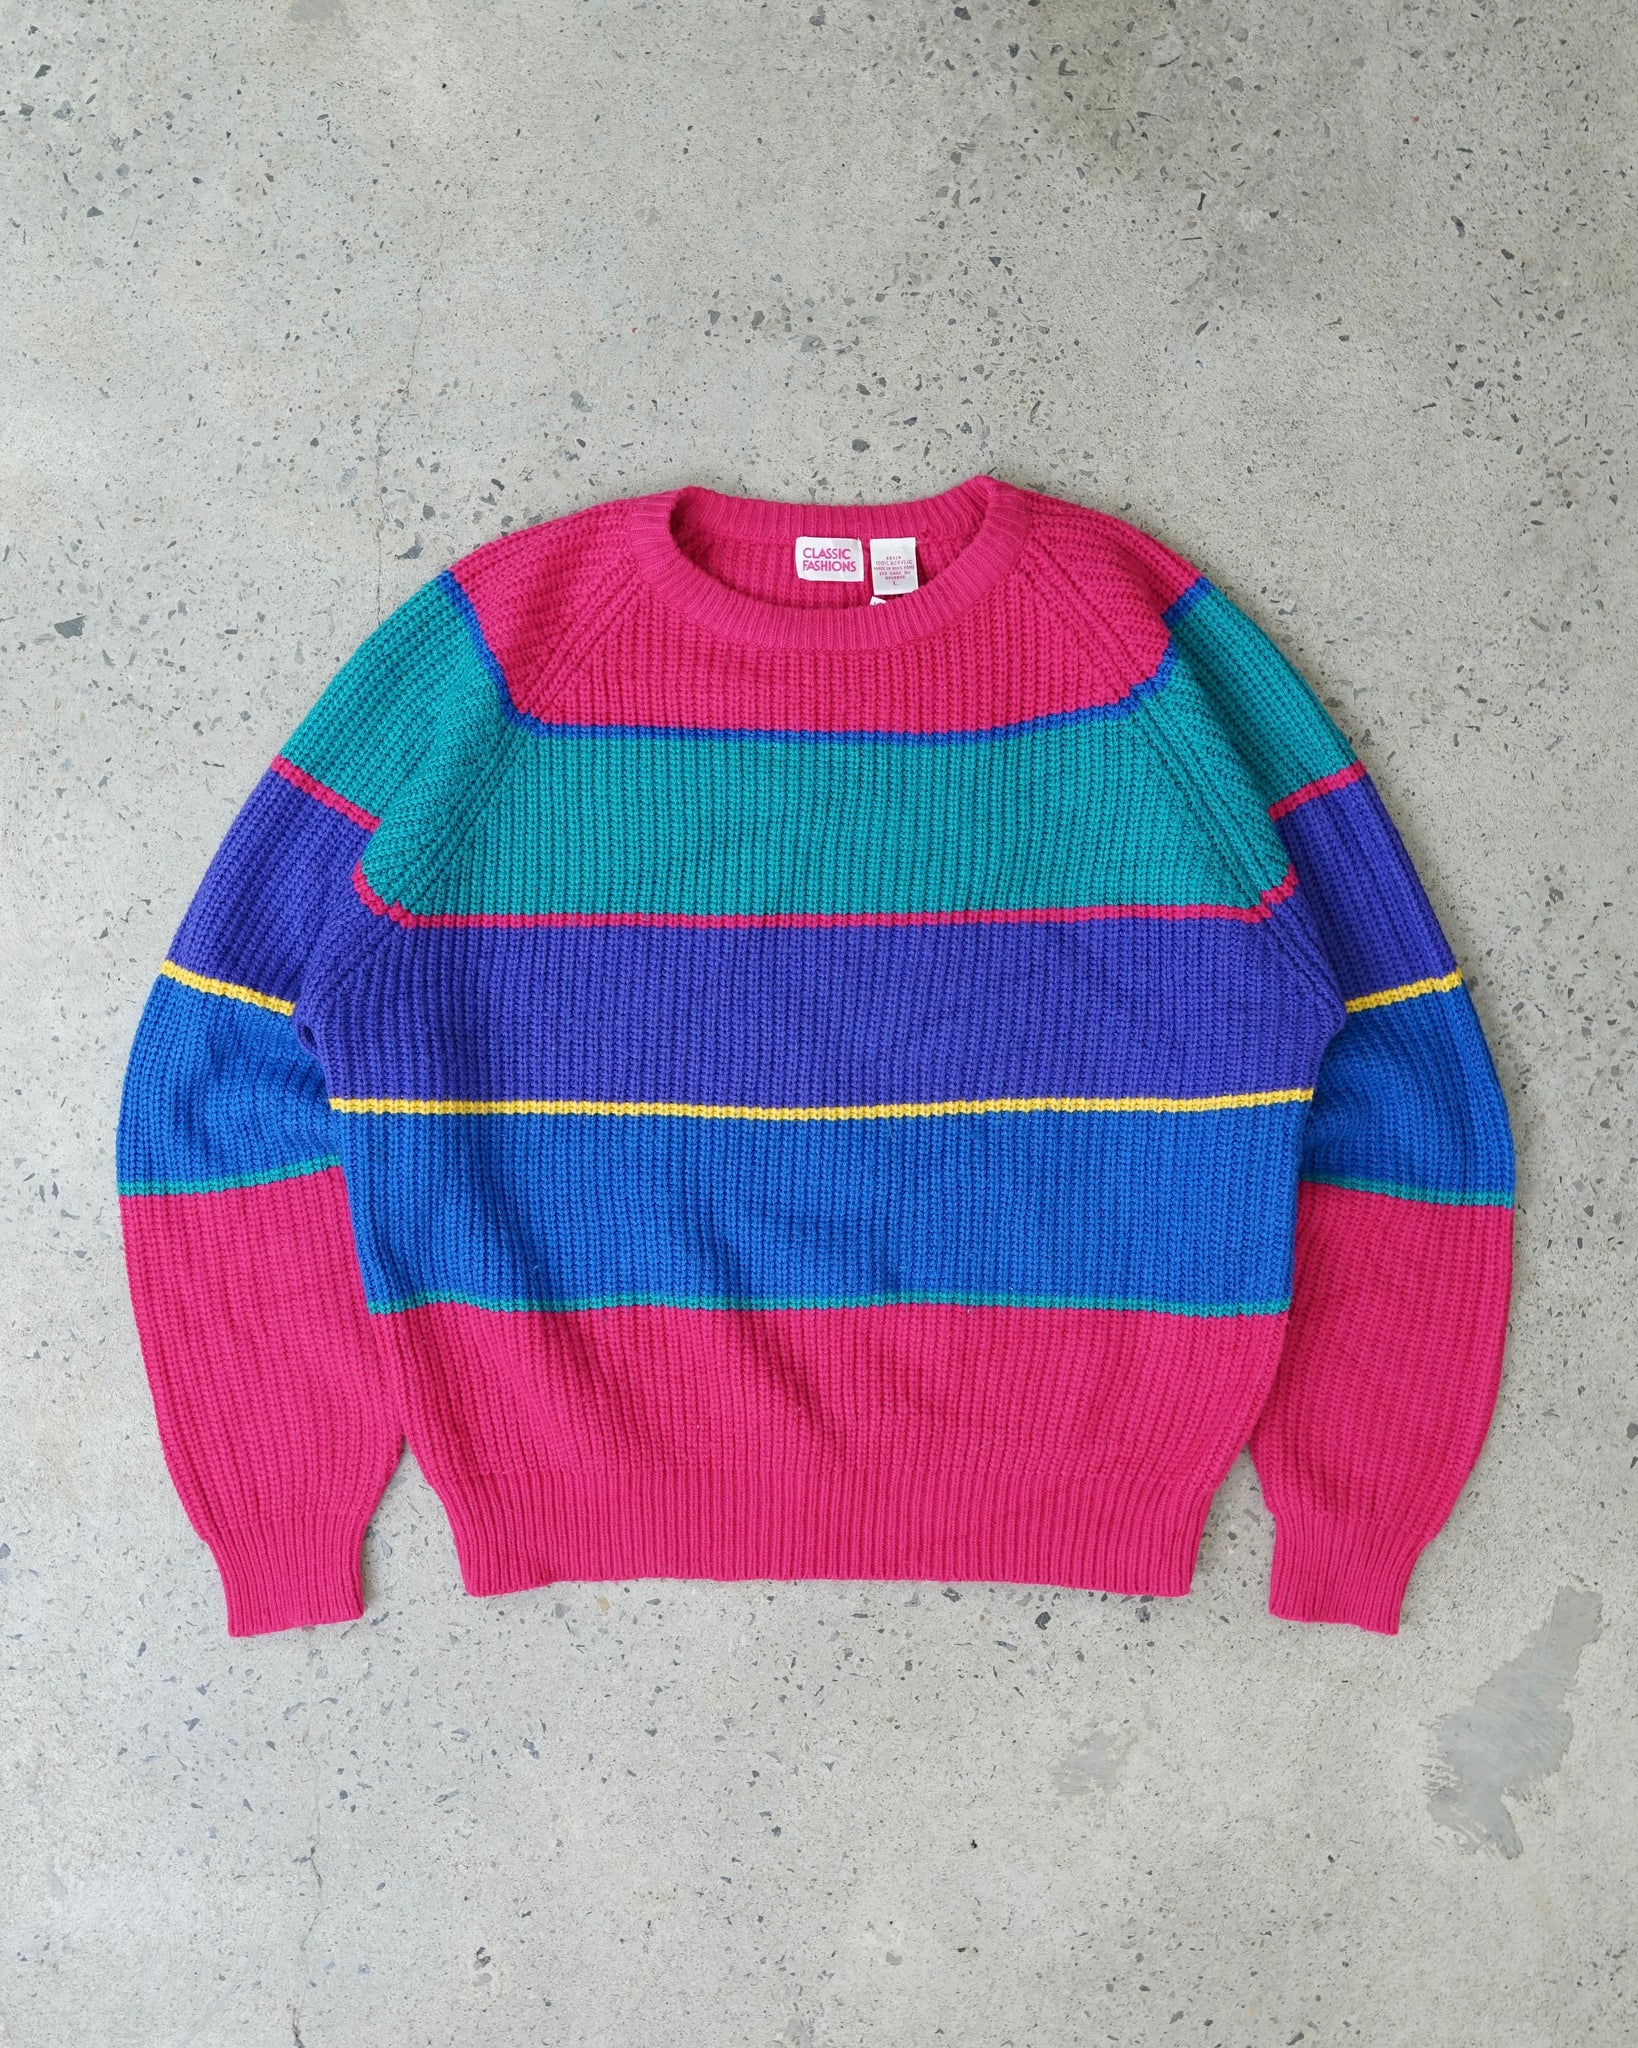 classic fashions knit sweater